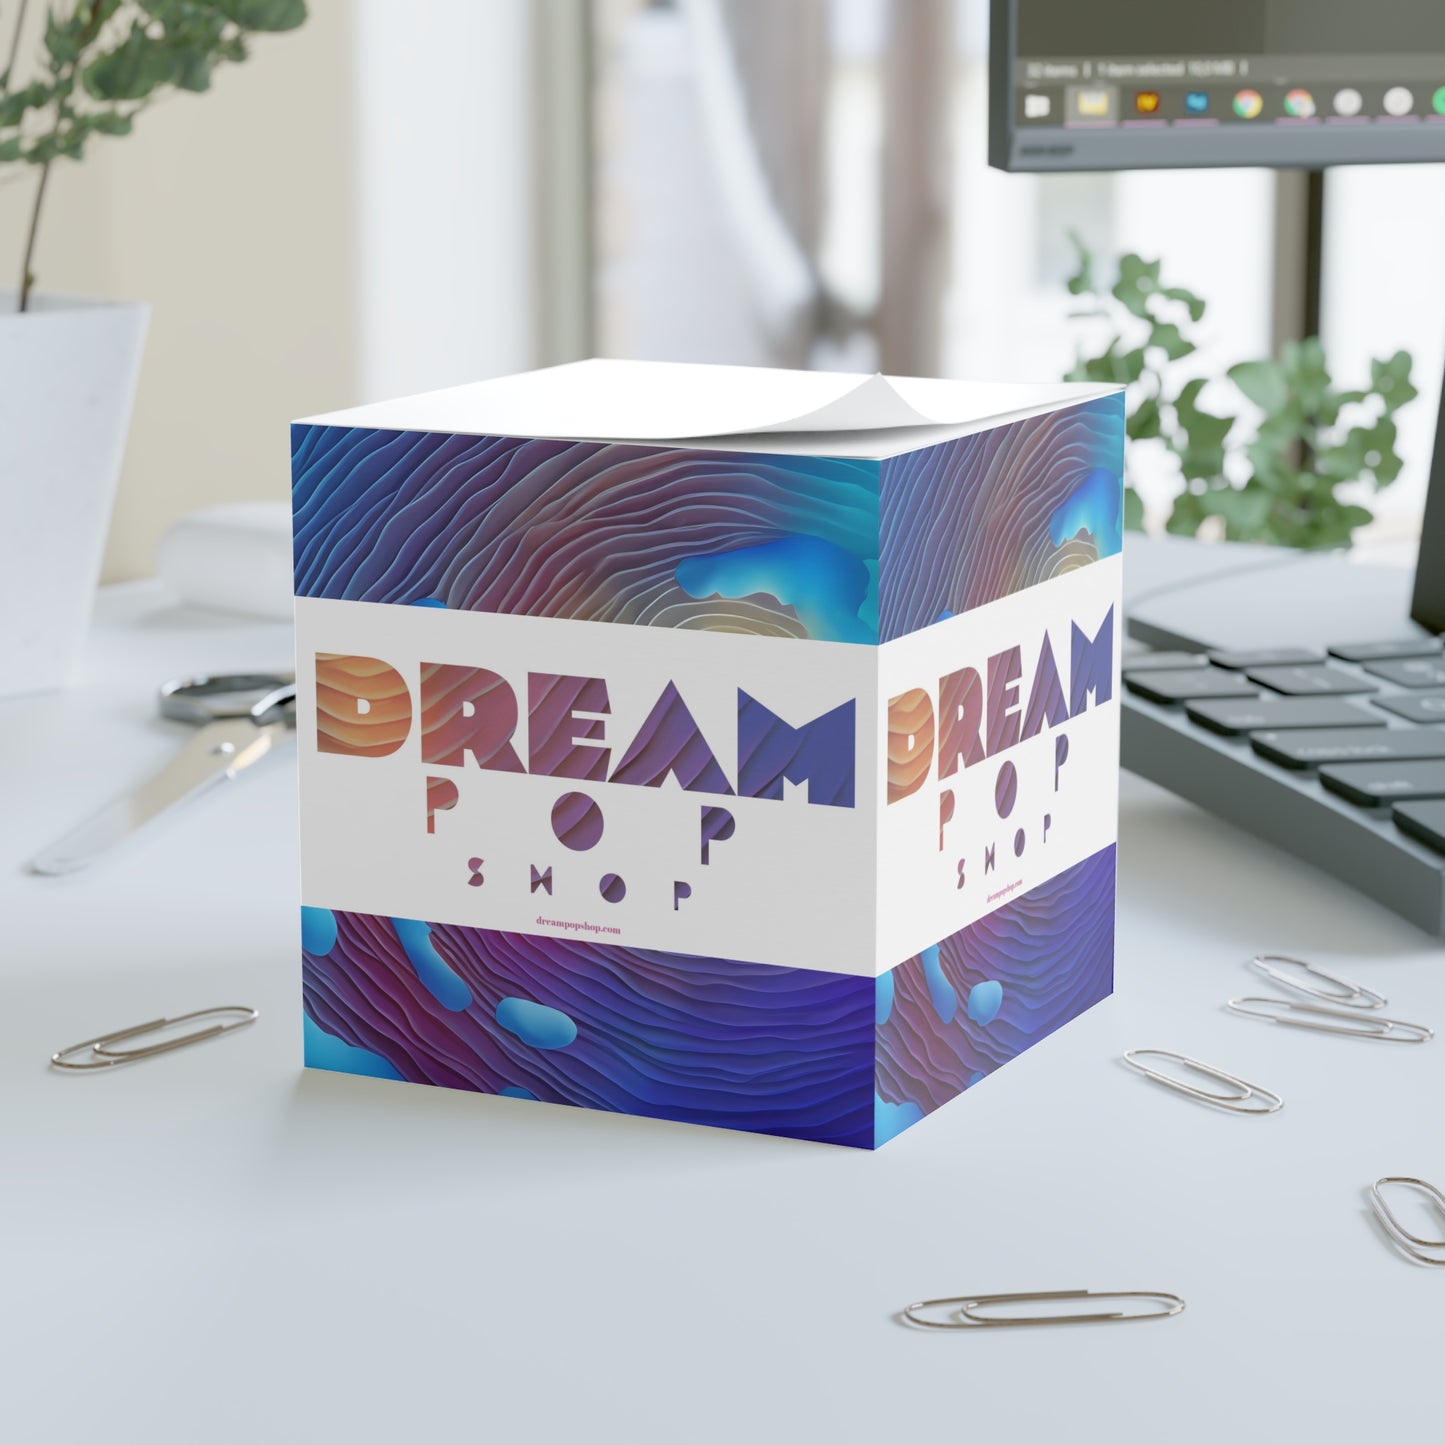 Dream Pop Shop Note Cube